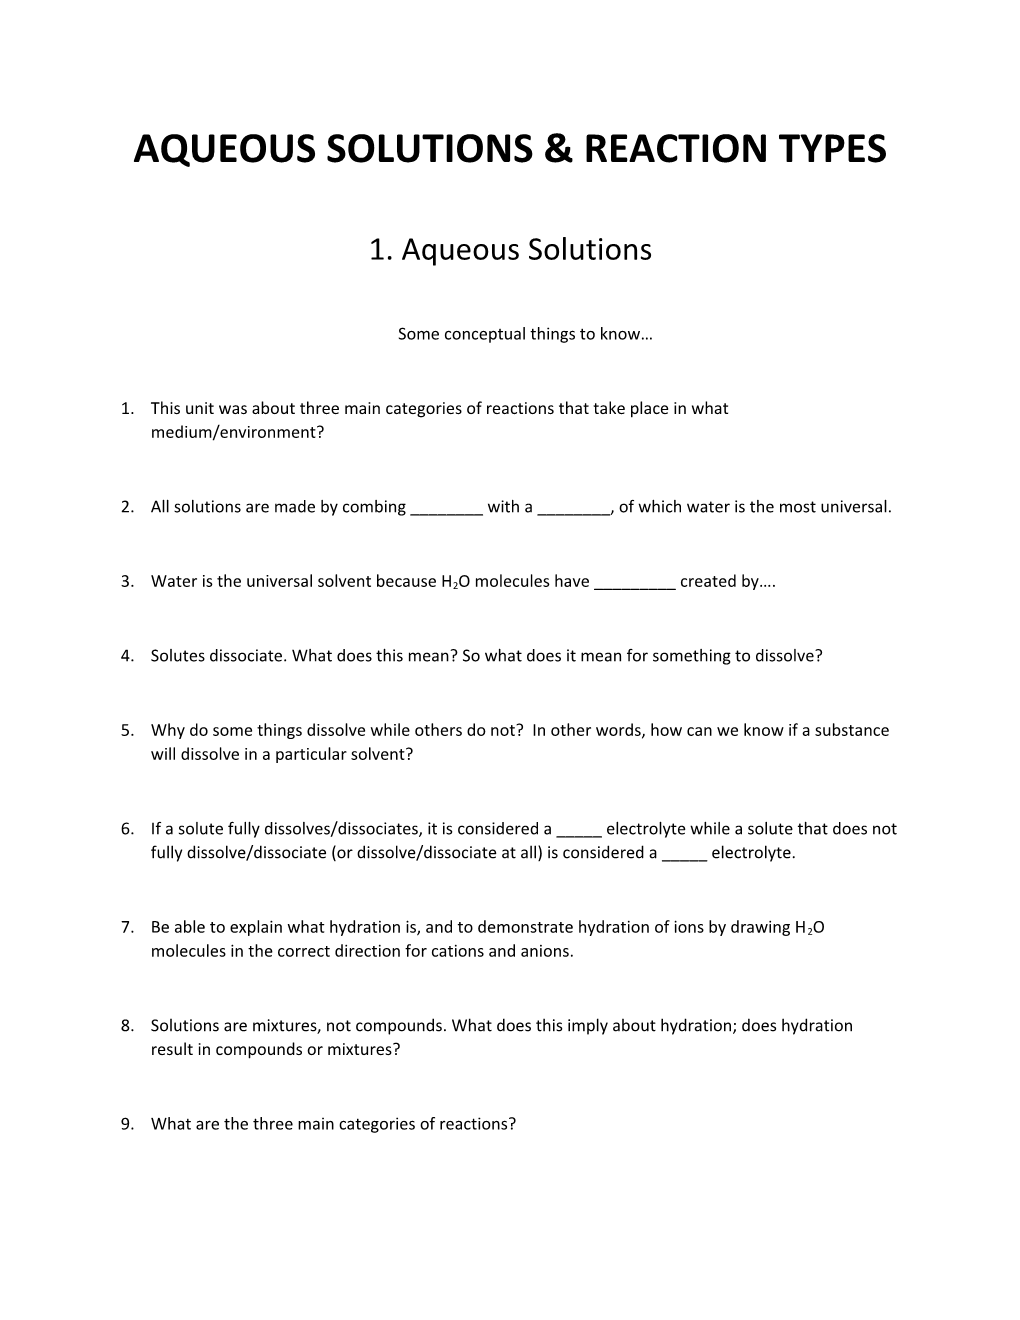 Aqueous Solutions & Reaction Types